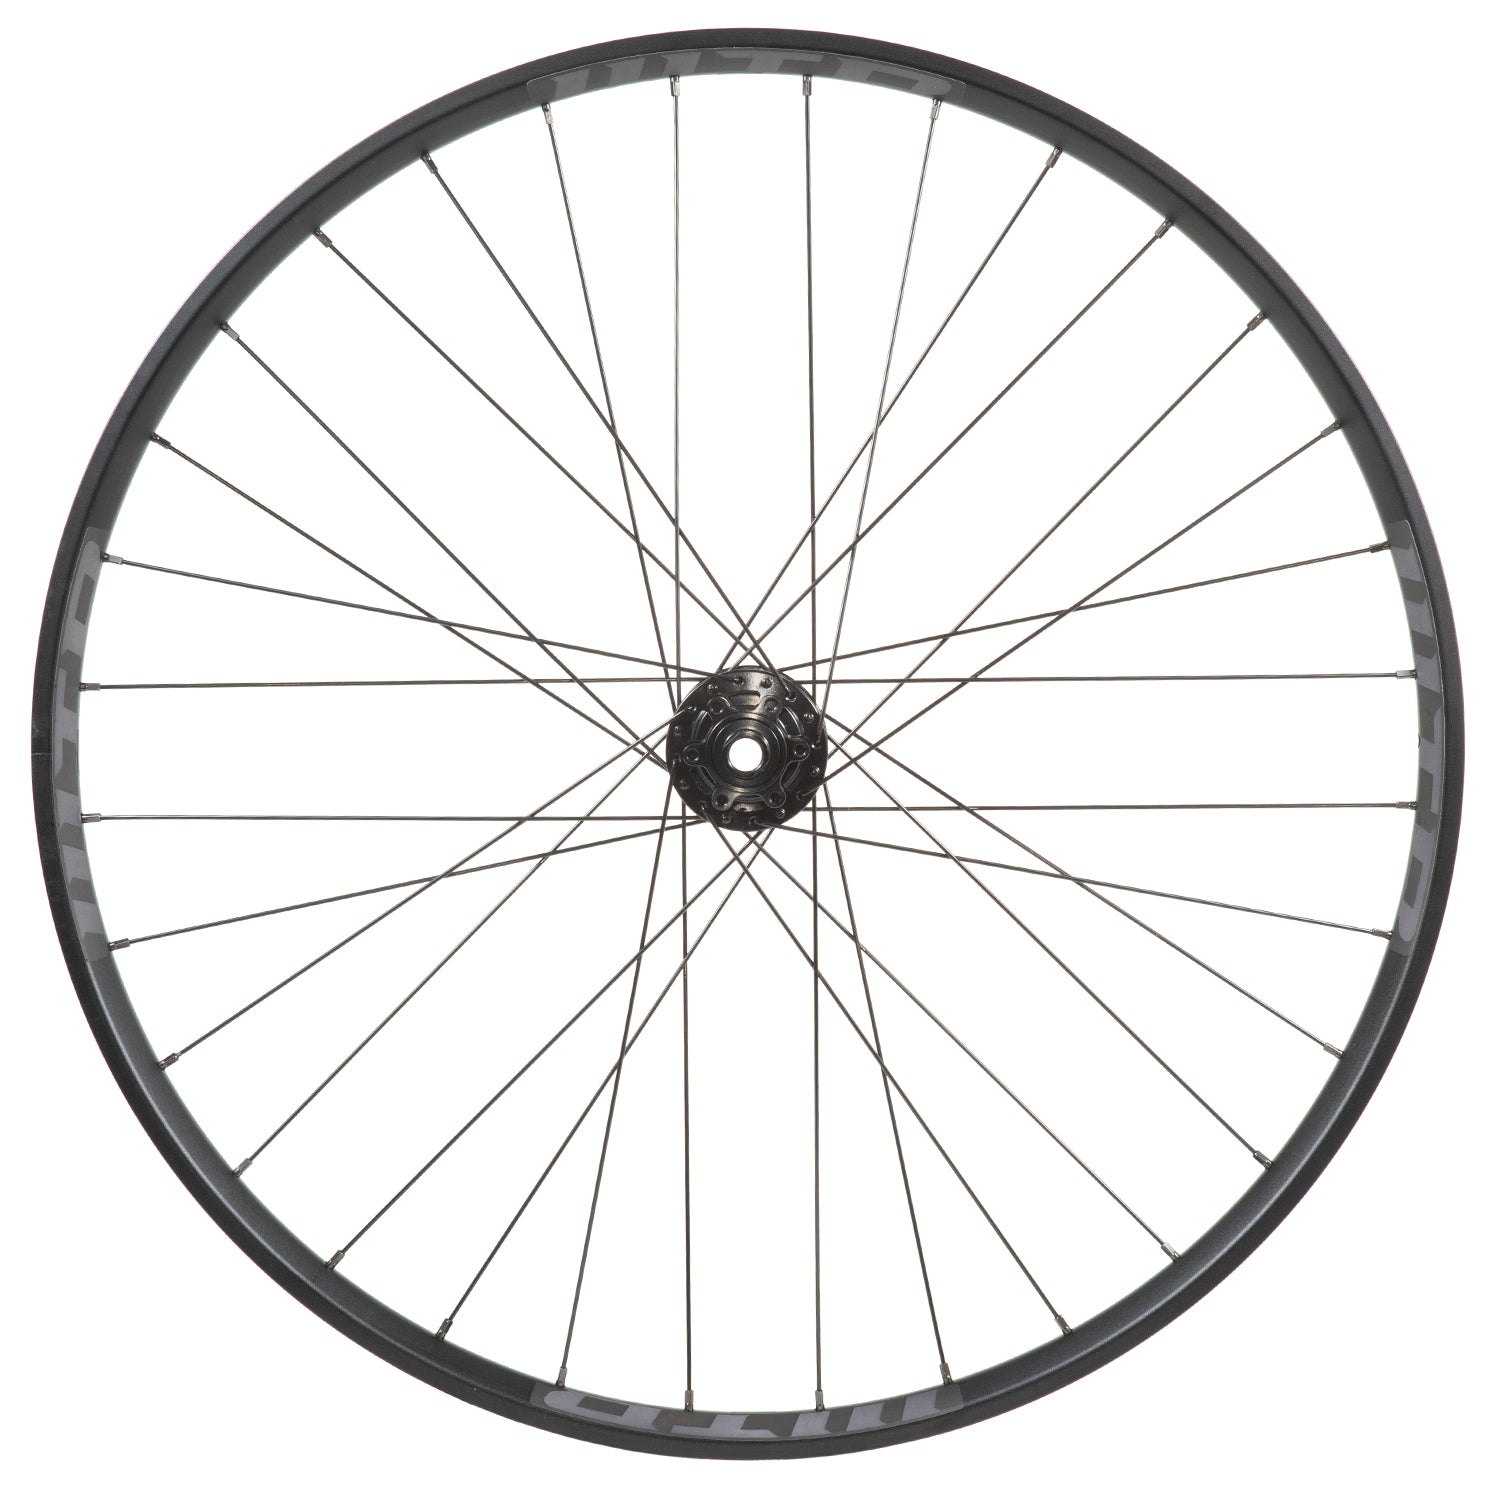 GORILLA SPUN Build Wheel WTB KOM Tough i30 x VELOCITY MTB Boost]